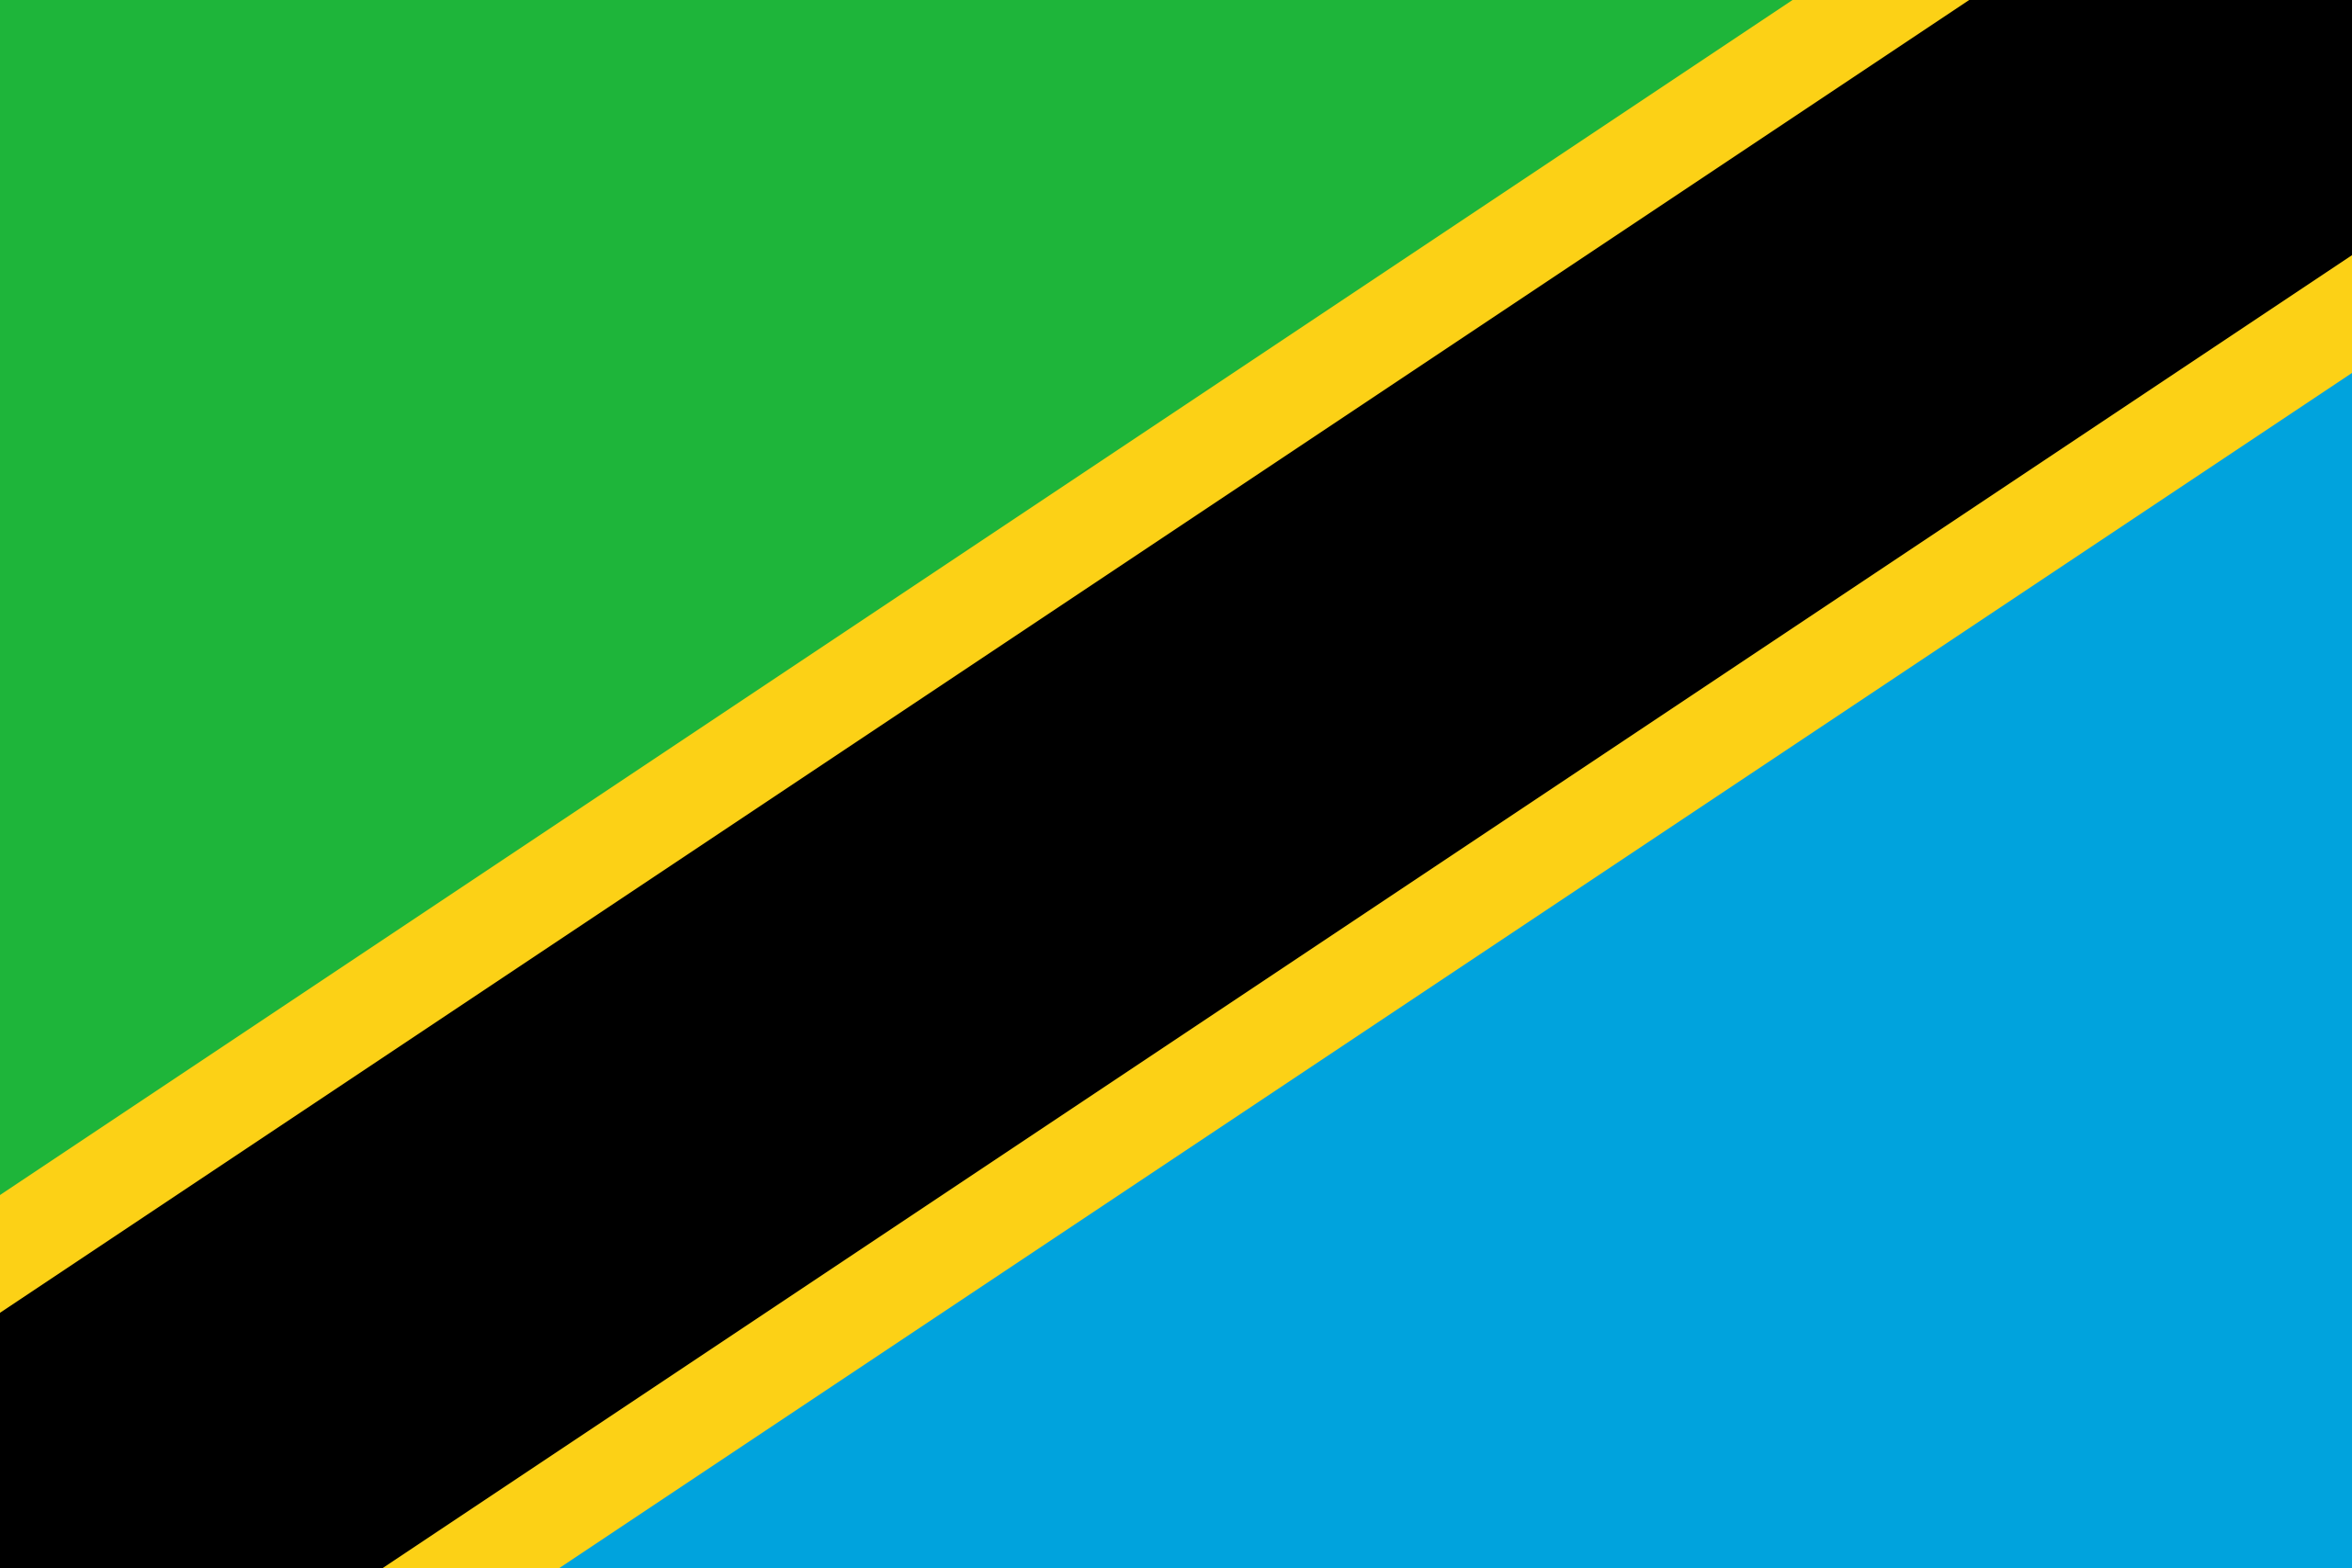 United Republic of Tanzania's flag